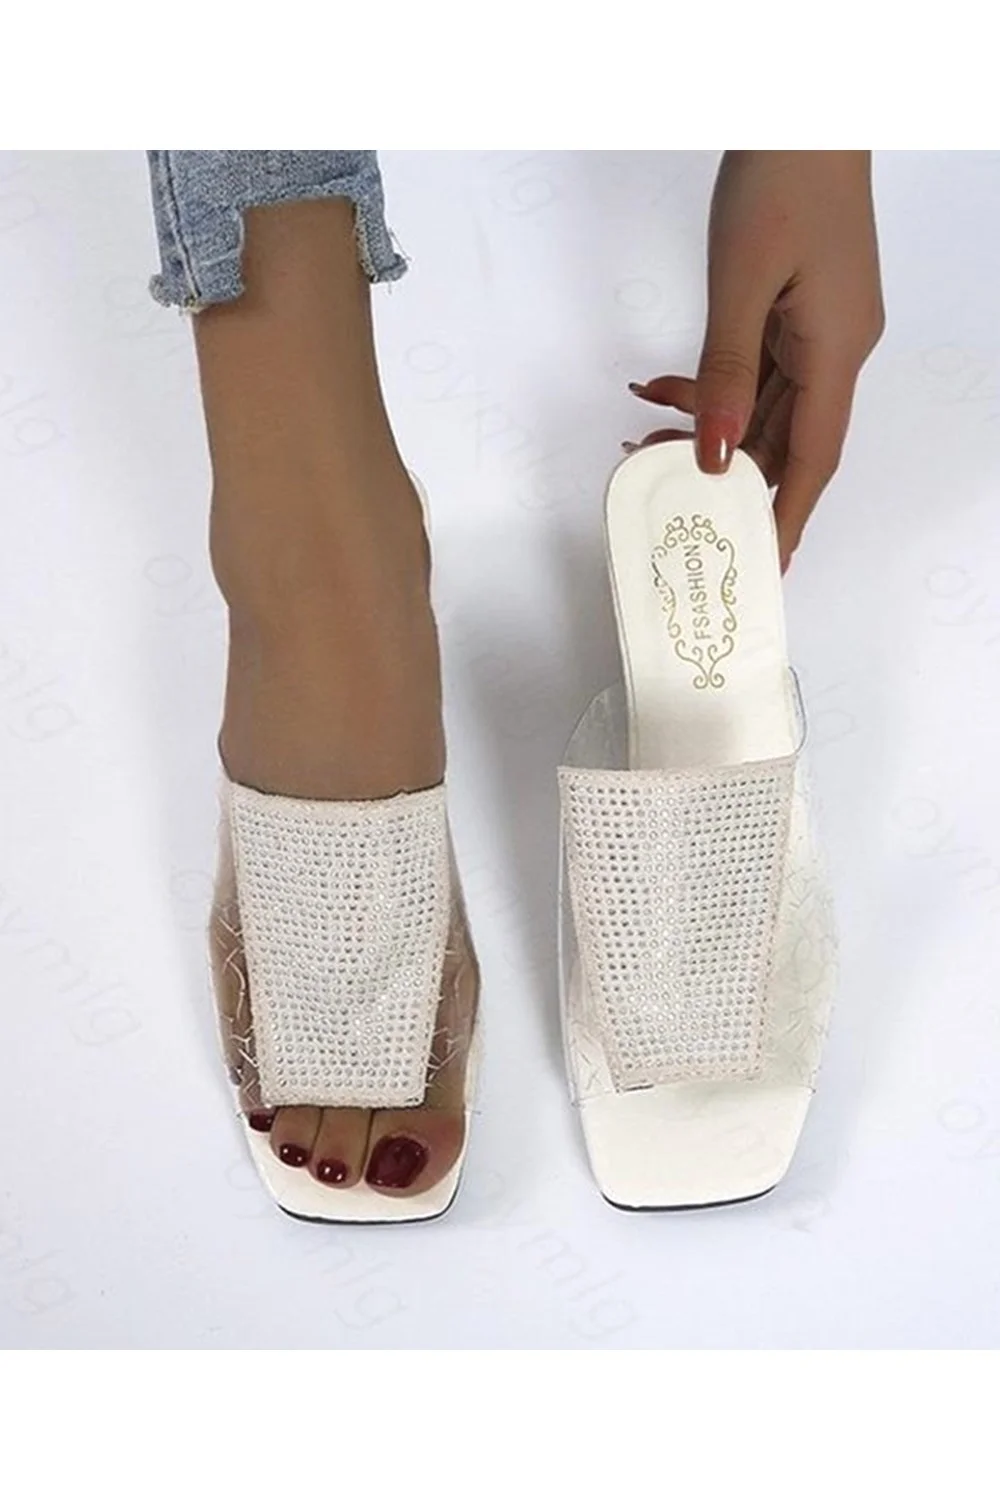  Fashion Summer Crystal Sandals Rhinestone Heels Open Toe Shoes Woman Colorful Ladies Beach Flip Flops Slides 928-0